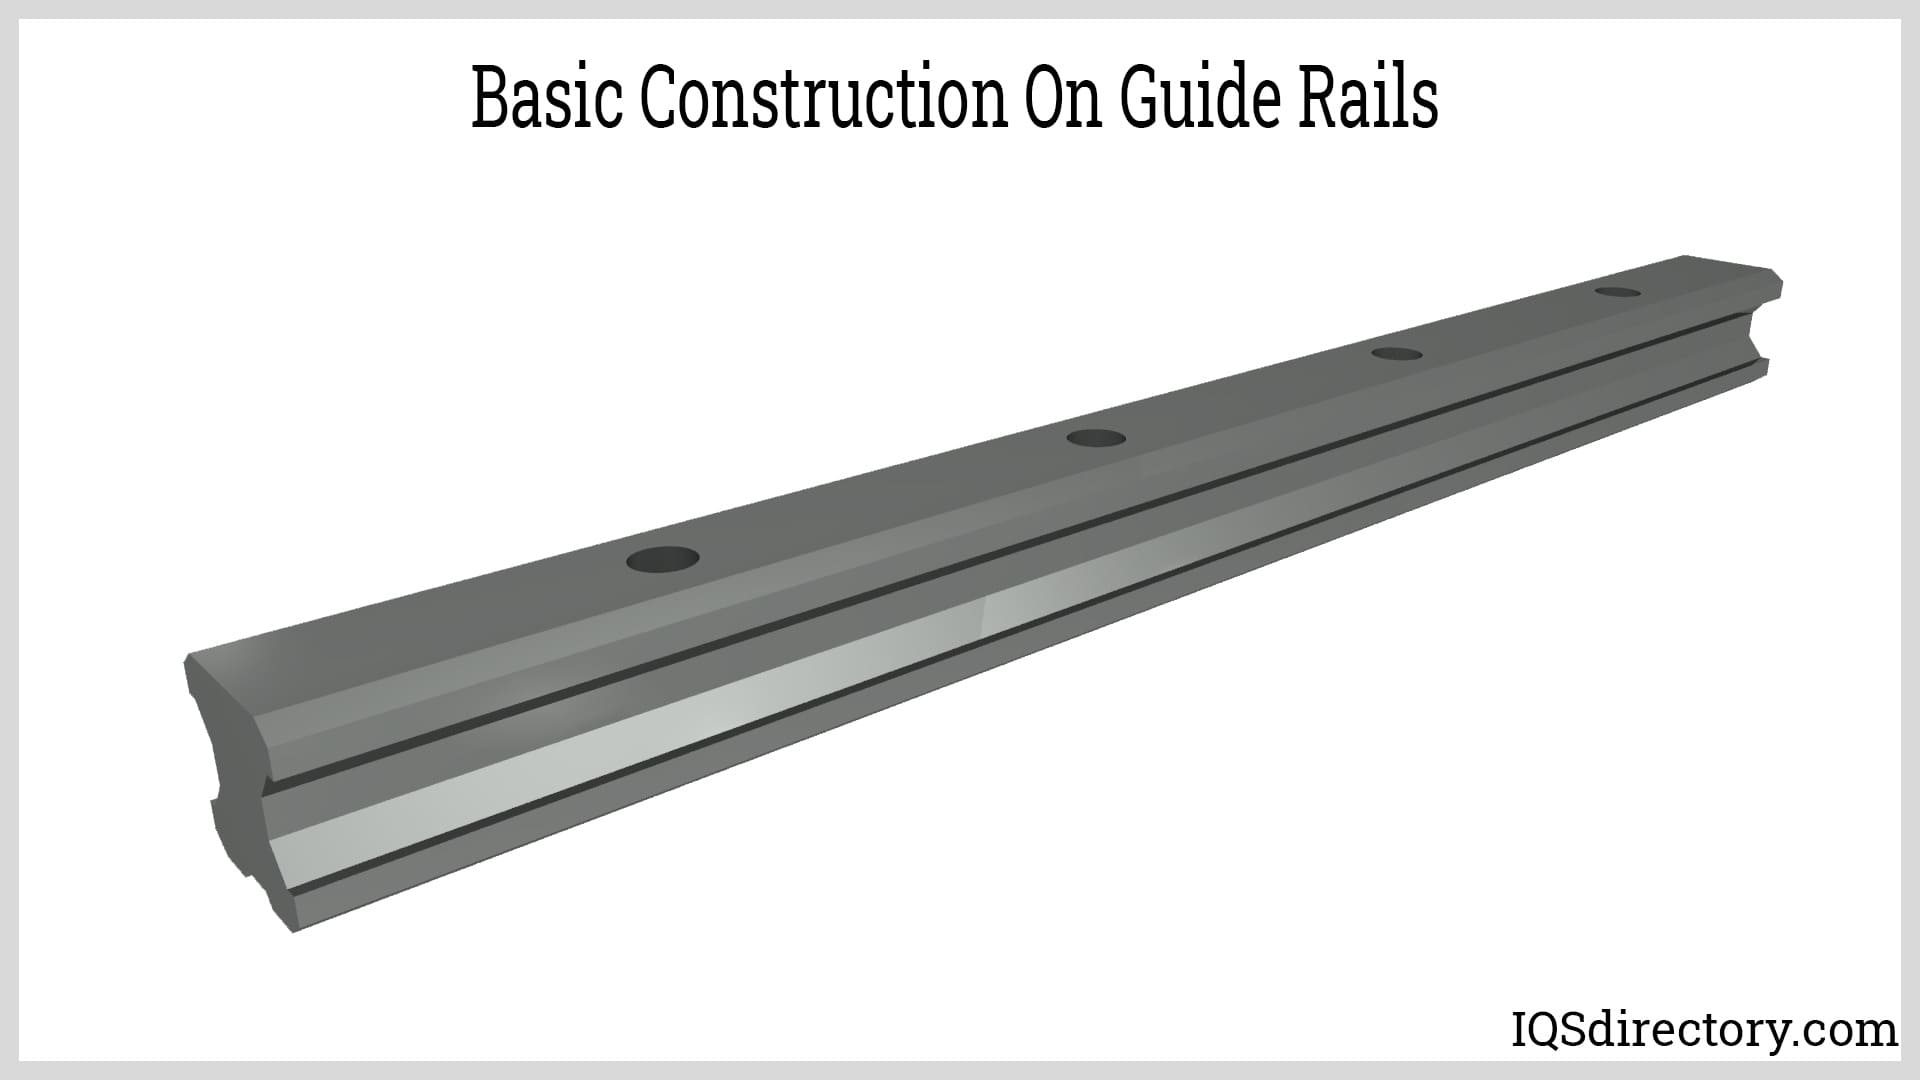 Basic Construction on Guide Rails